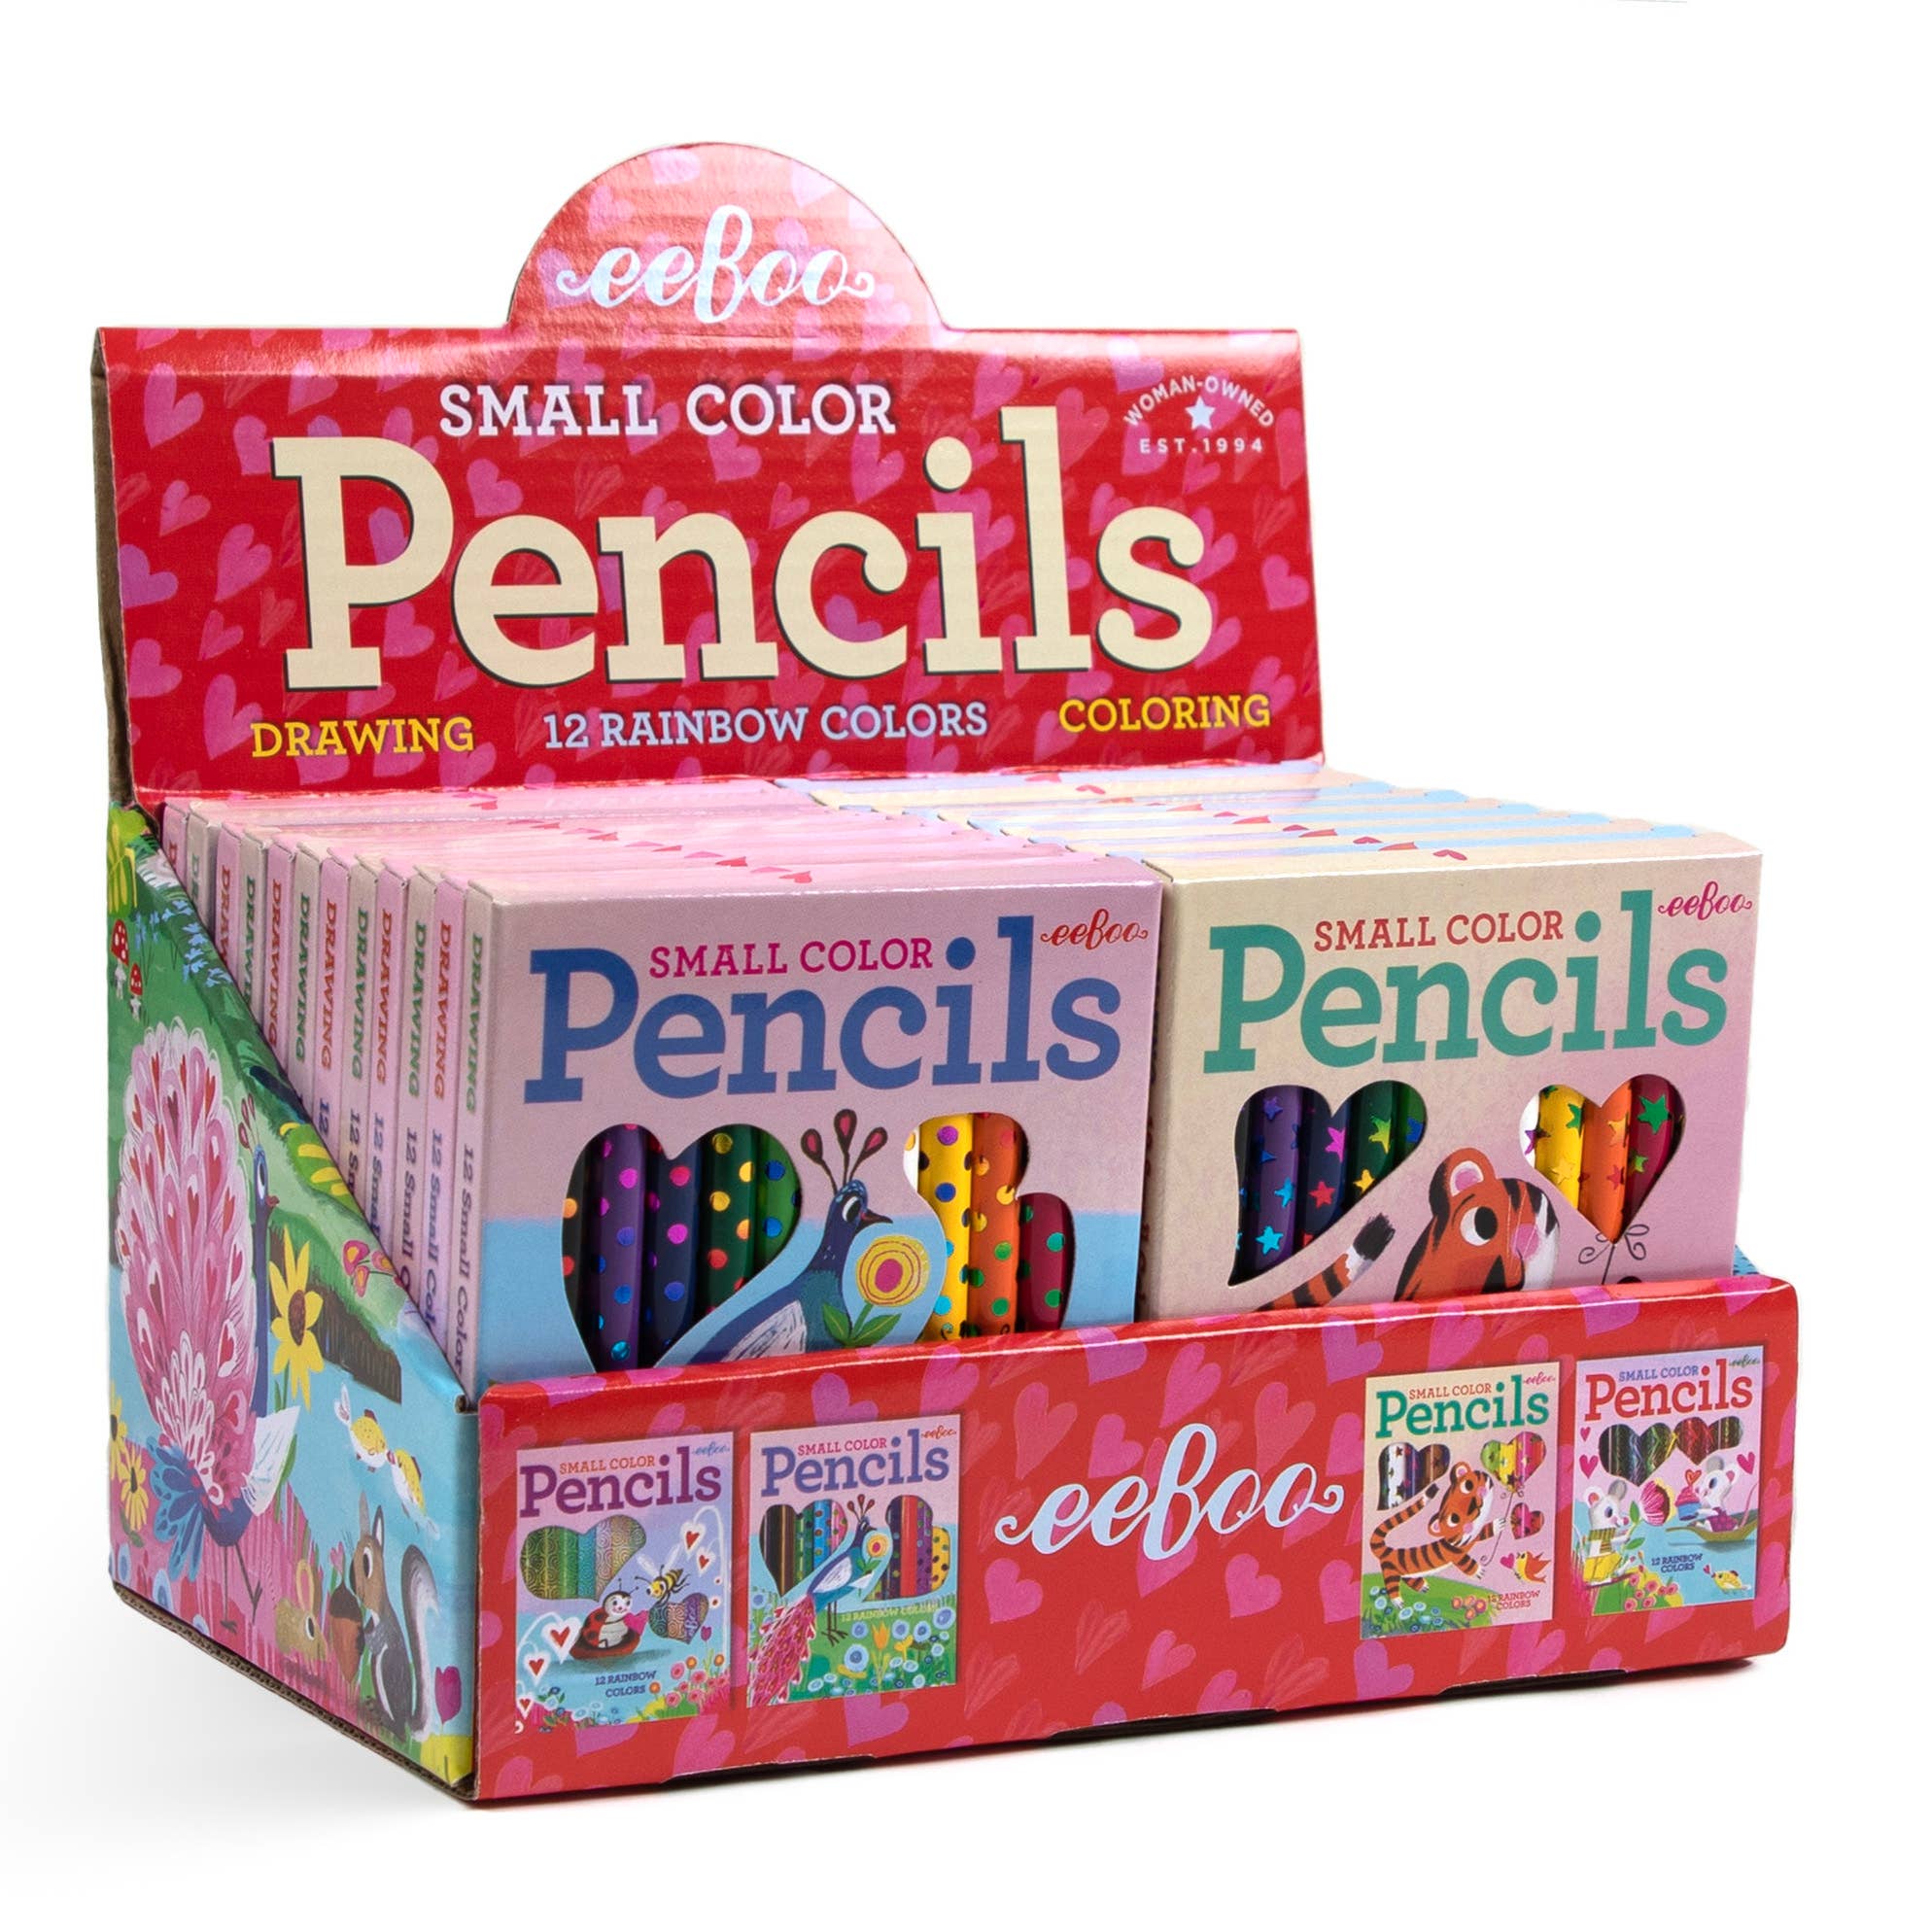 6 Pcs Valentine's Day Multi-Point Pencils